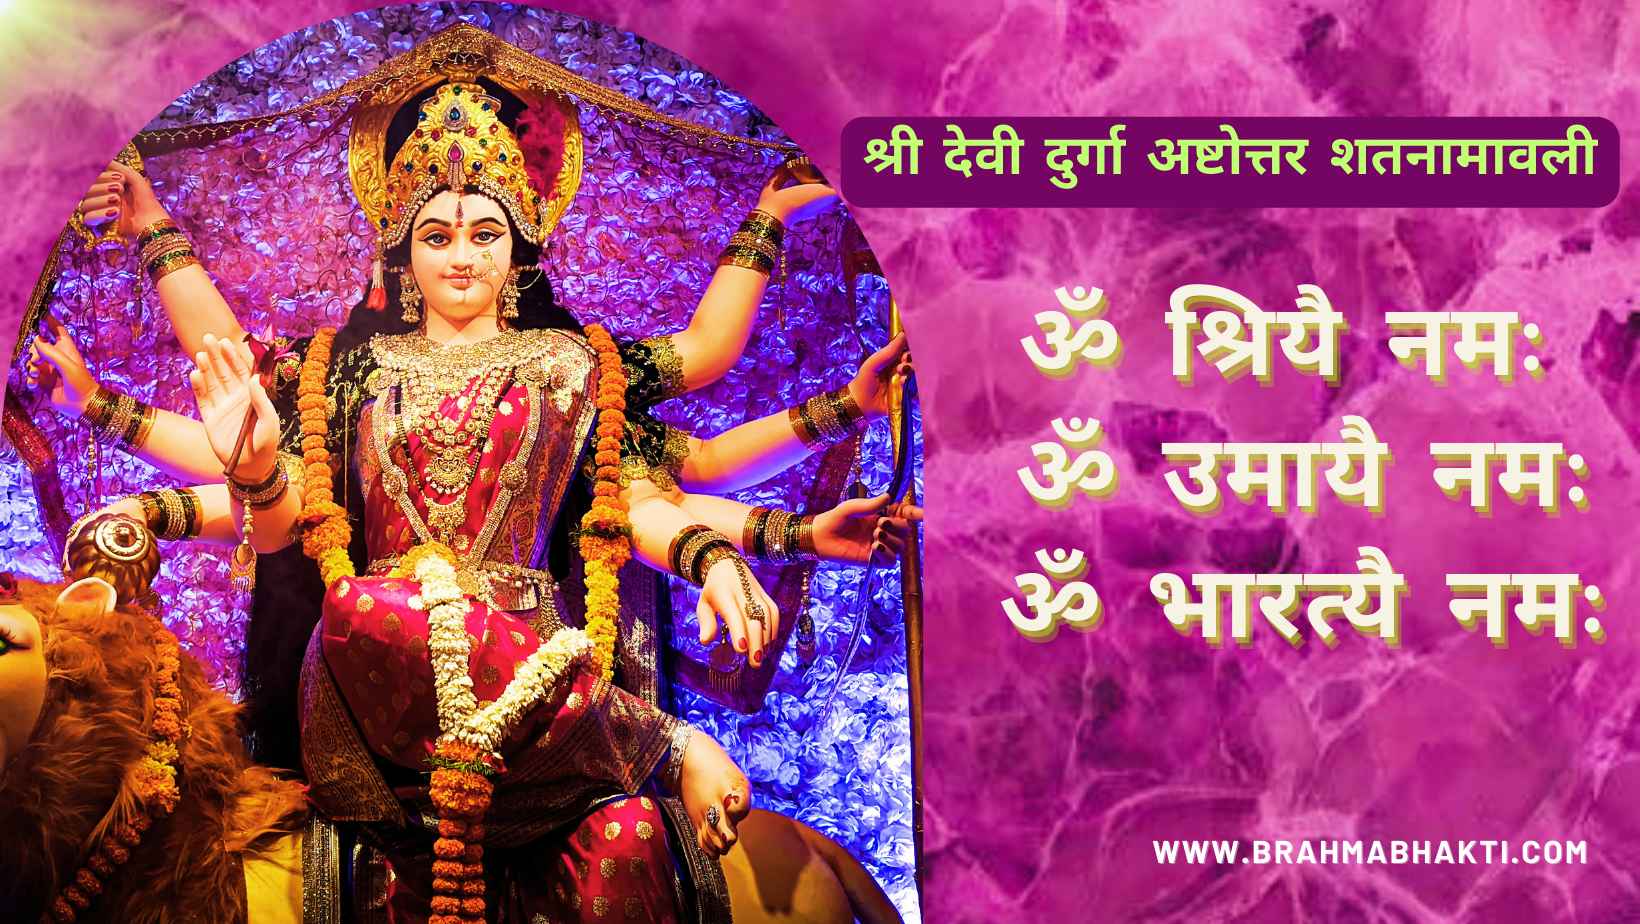 श्री देवी दुर्गा अष्टोत्तर शतनामावली | दुर्गा 108 नामावली | Ashtottara Shatanamavali of Shree Durga